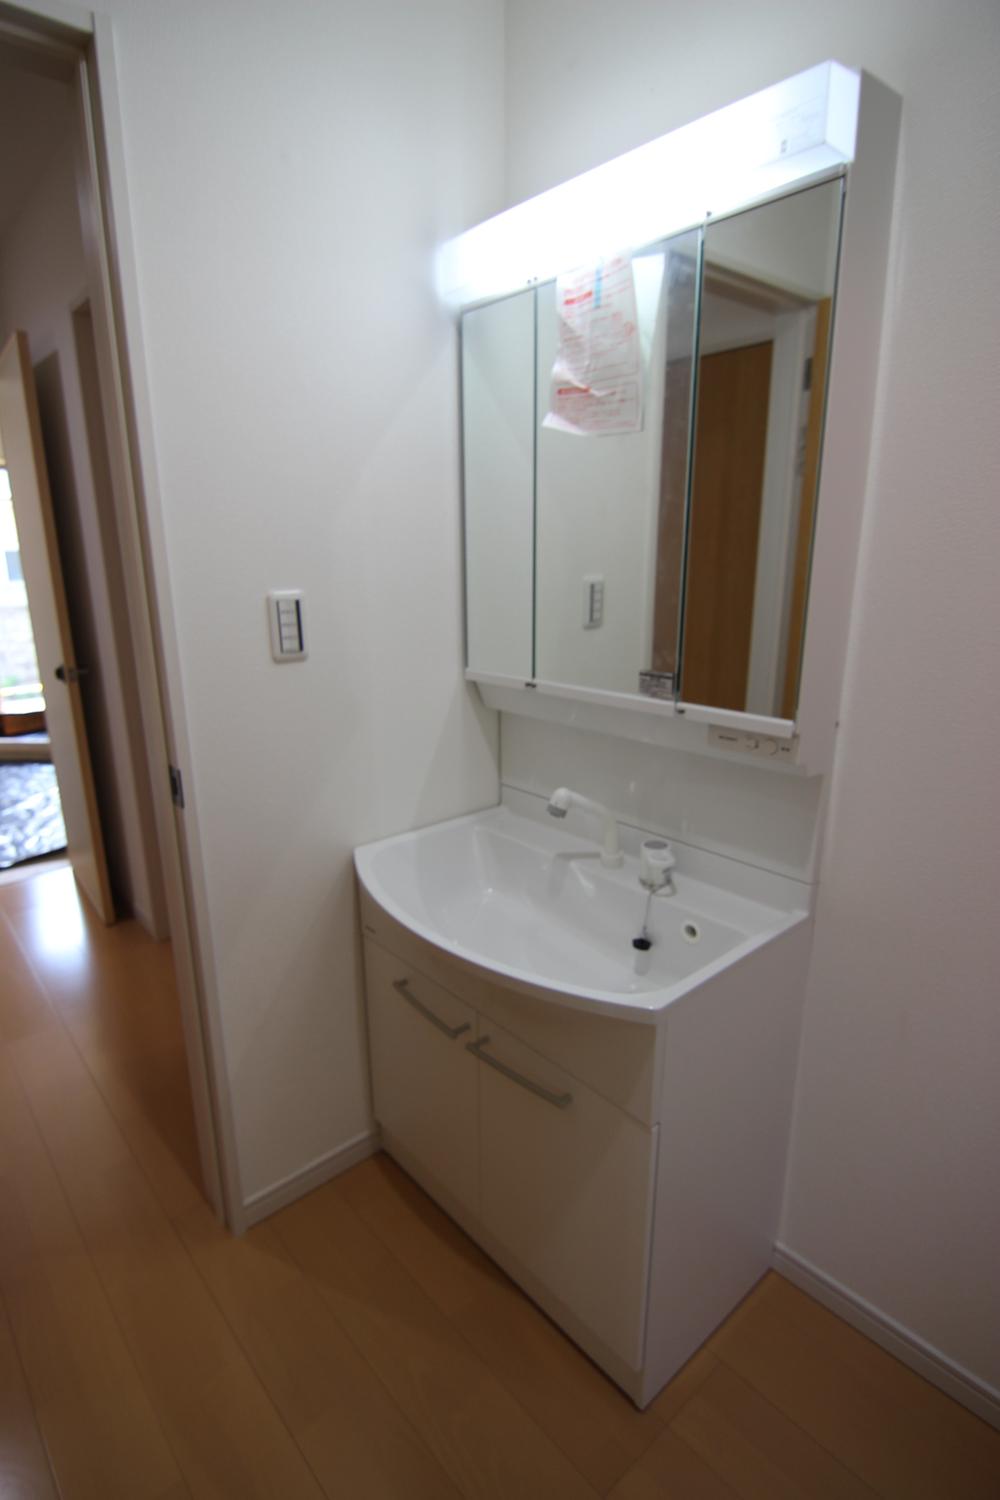 Wash basin, toilet. Three-sided vanity